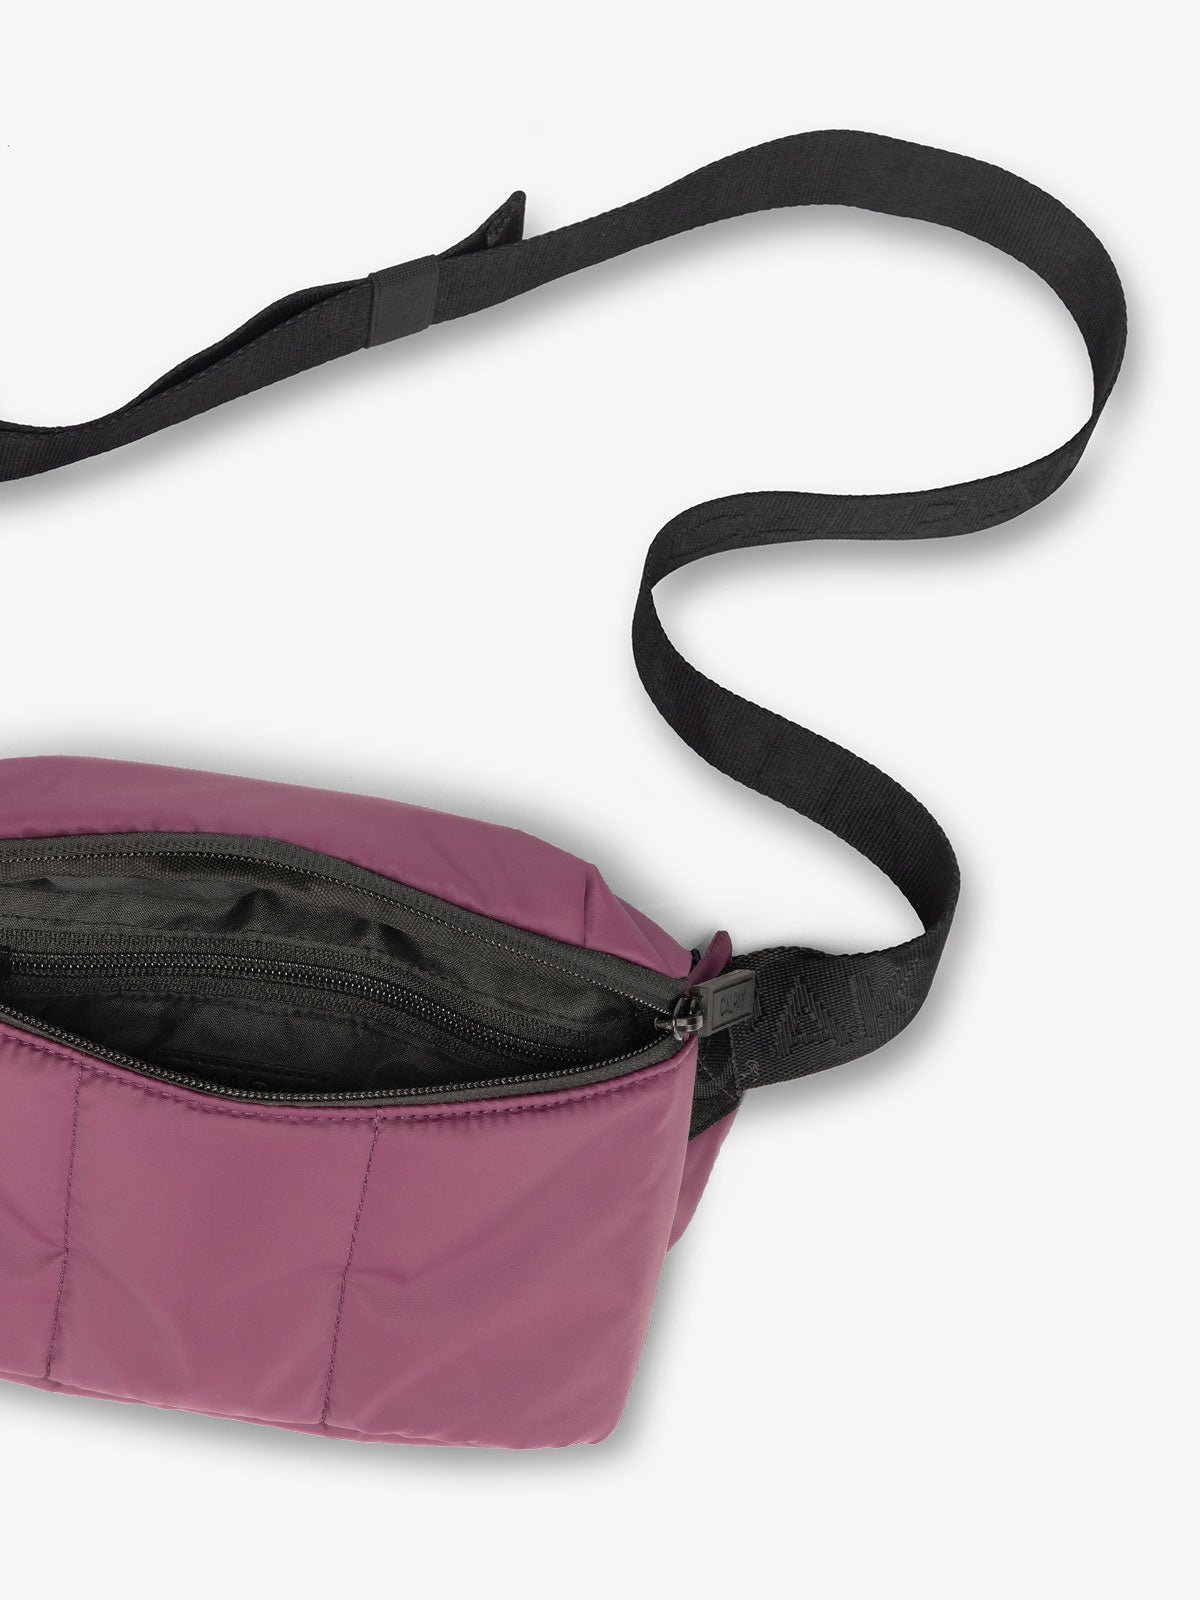 CALPAK Luka small travel waist Bag with multiple pockets in purple plum